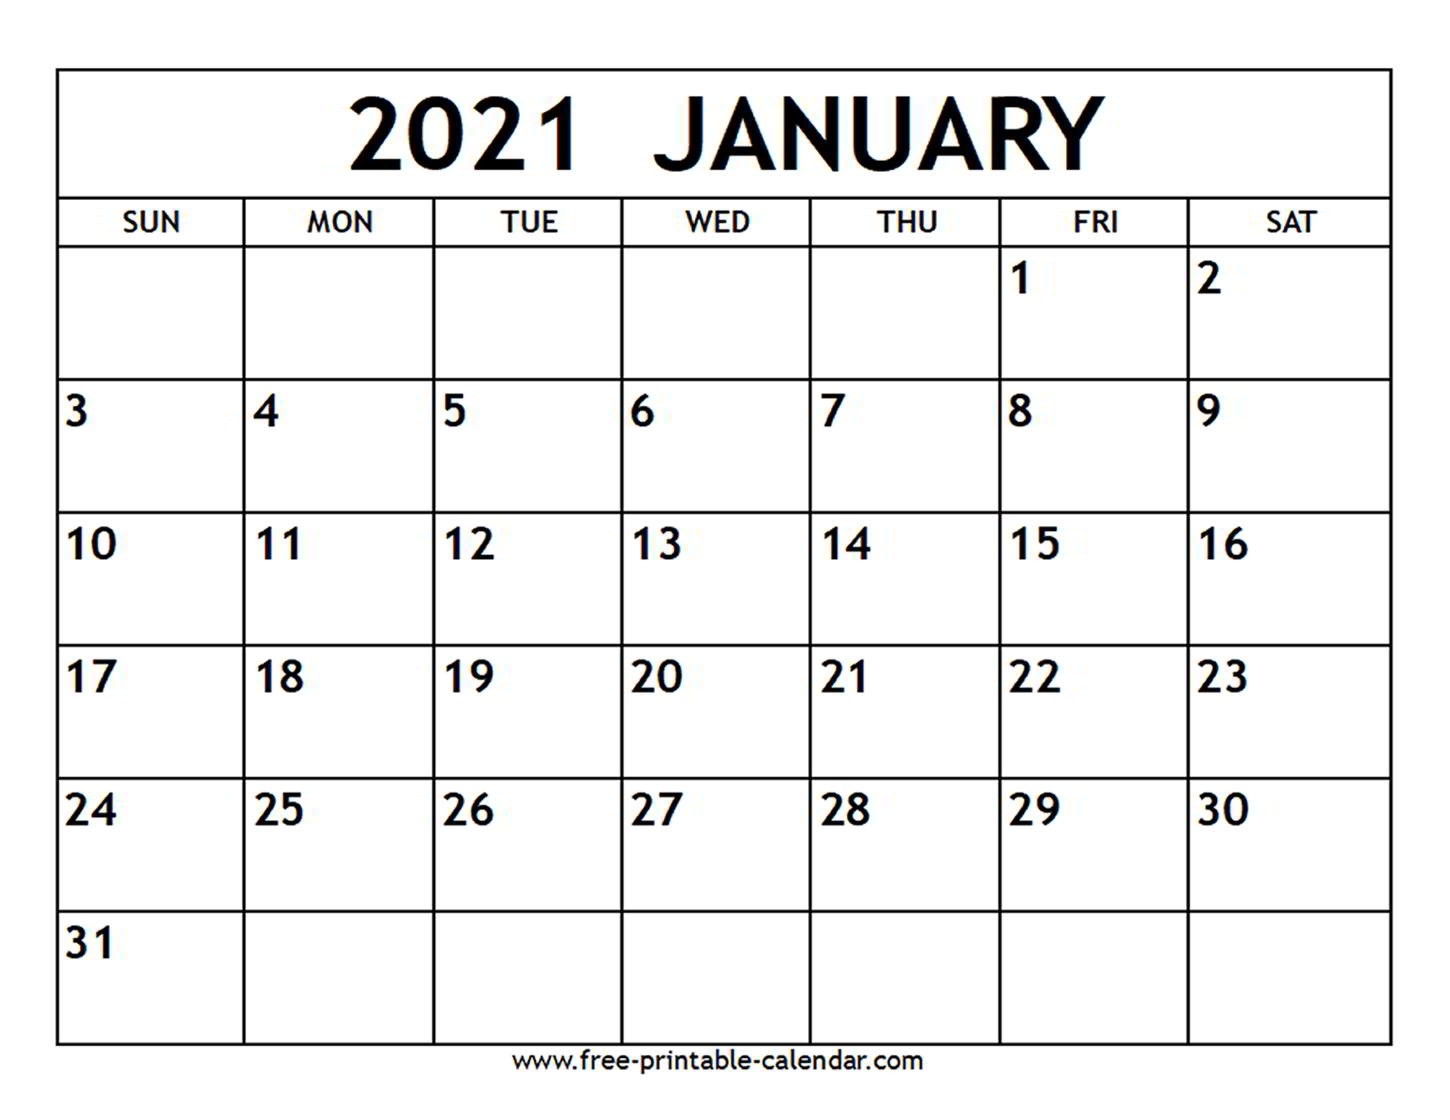 January 2021 Calendar - Free-Printable-Calendar-Print Calendar 2021 Free